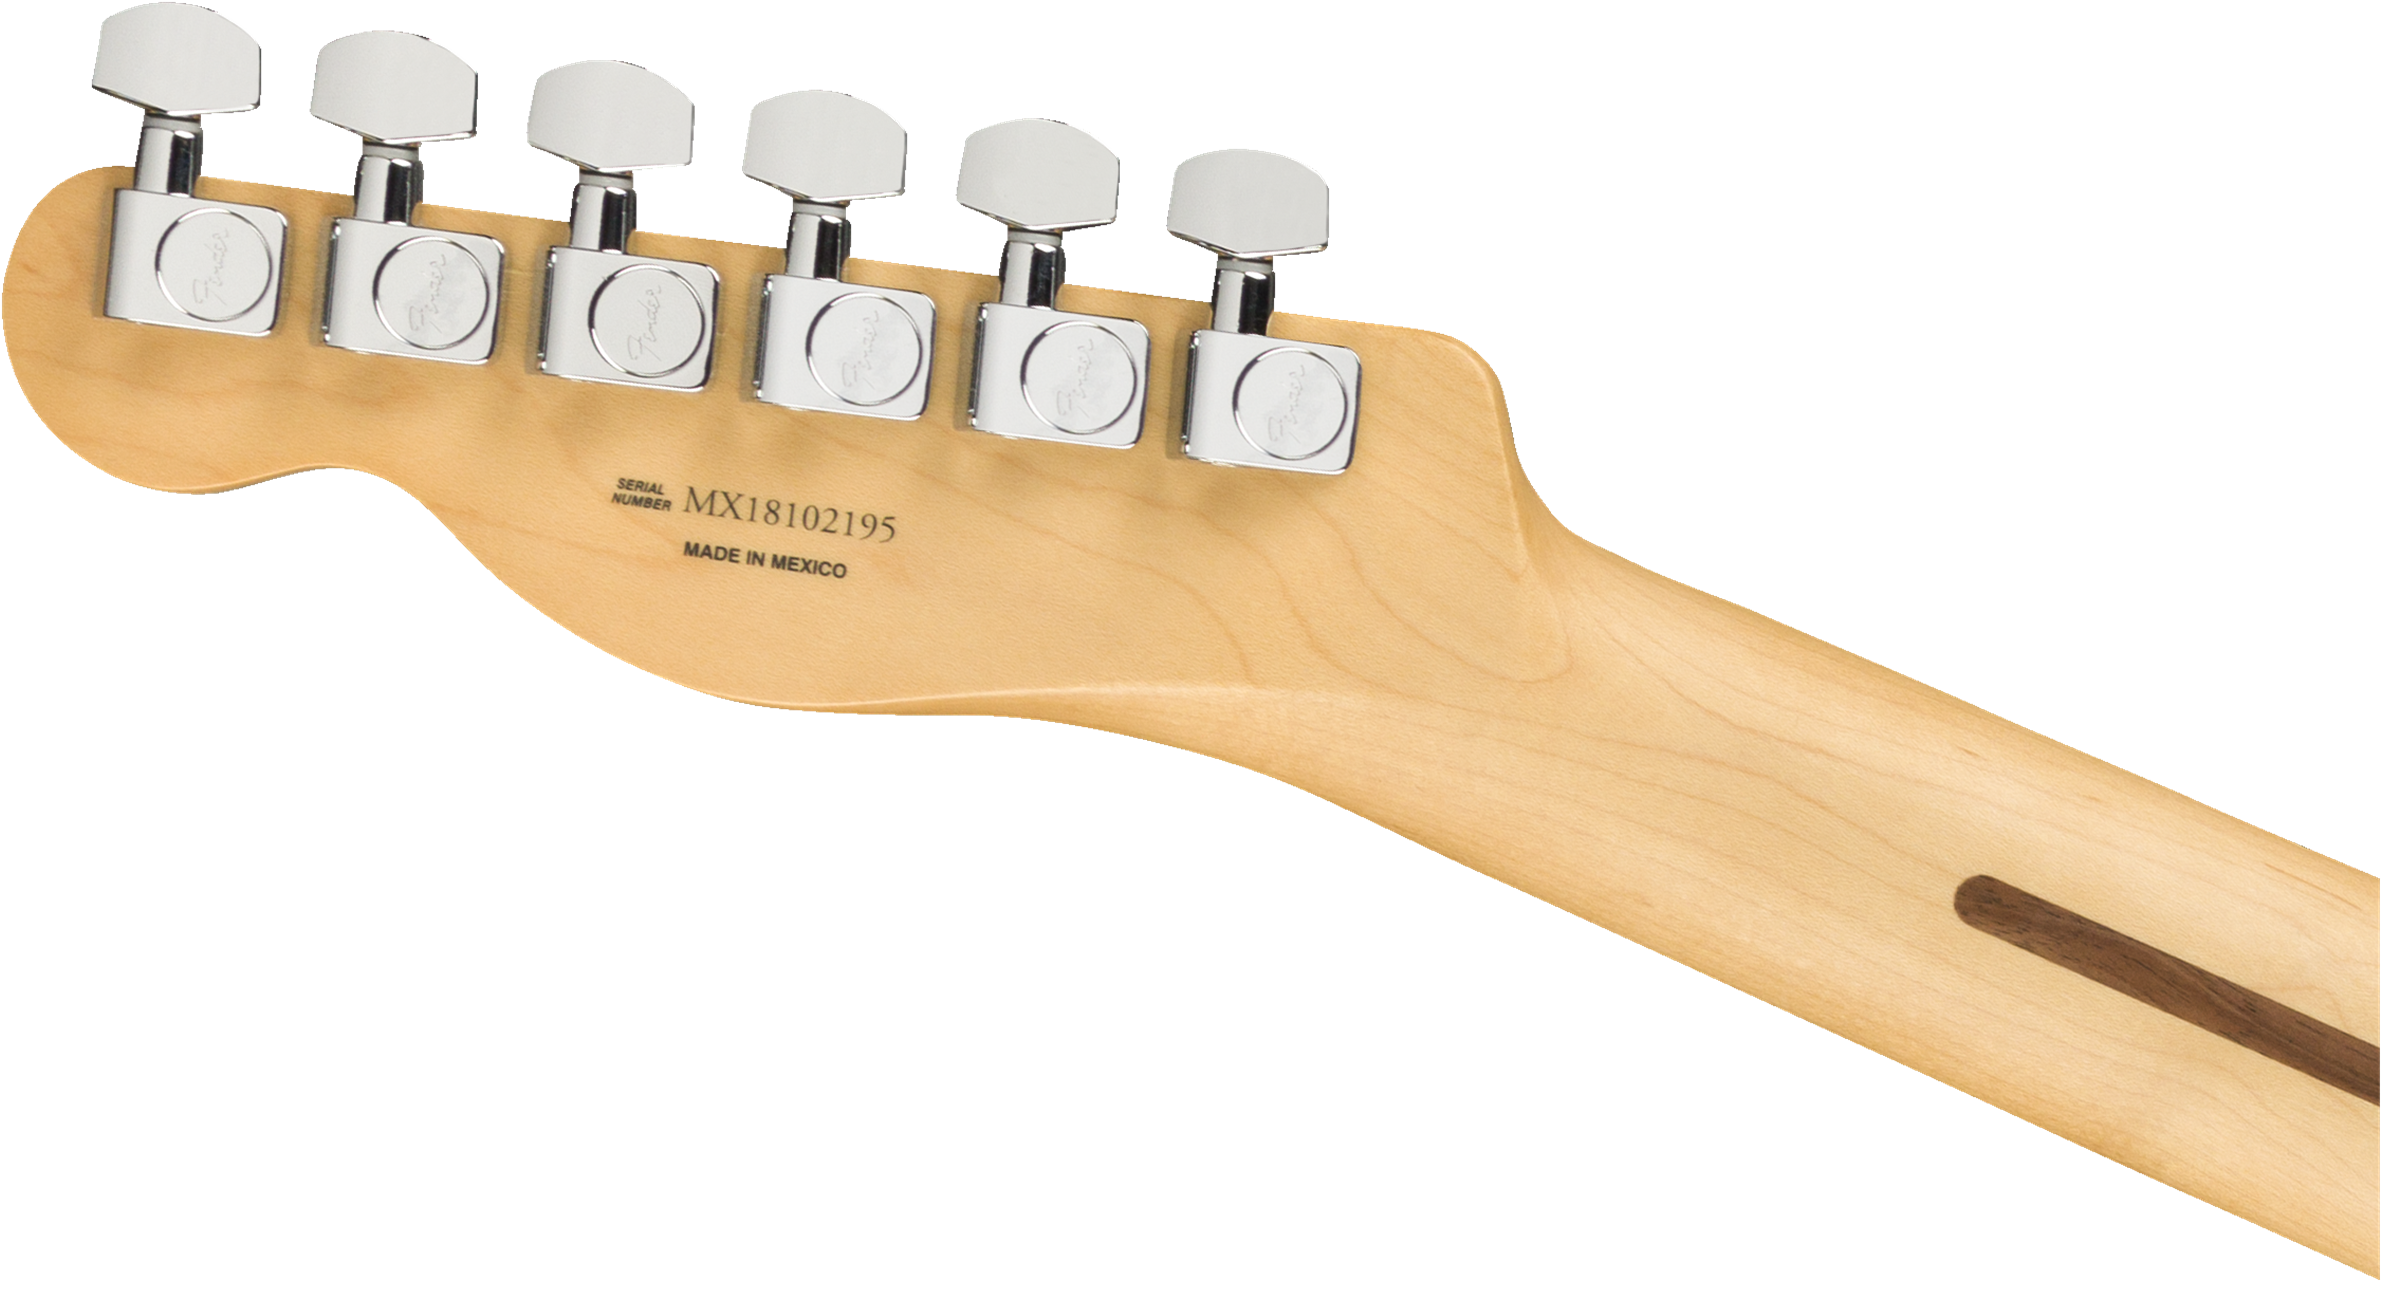 Fender Player Telecaster®, Maple Fingerboard, Black